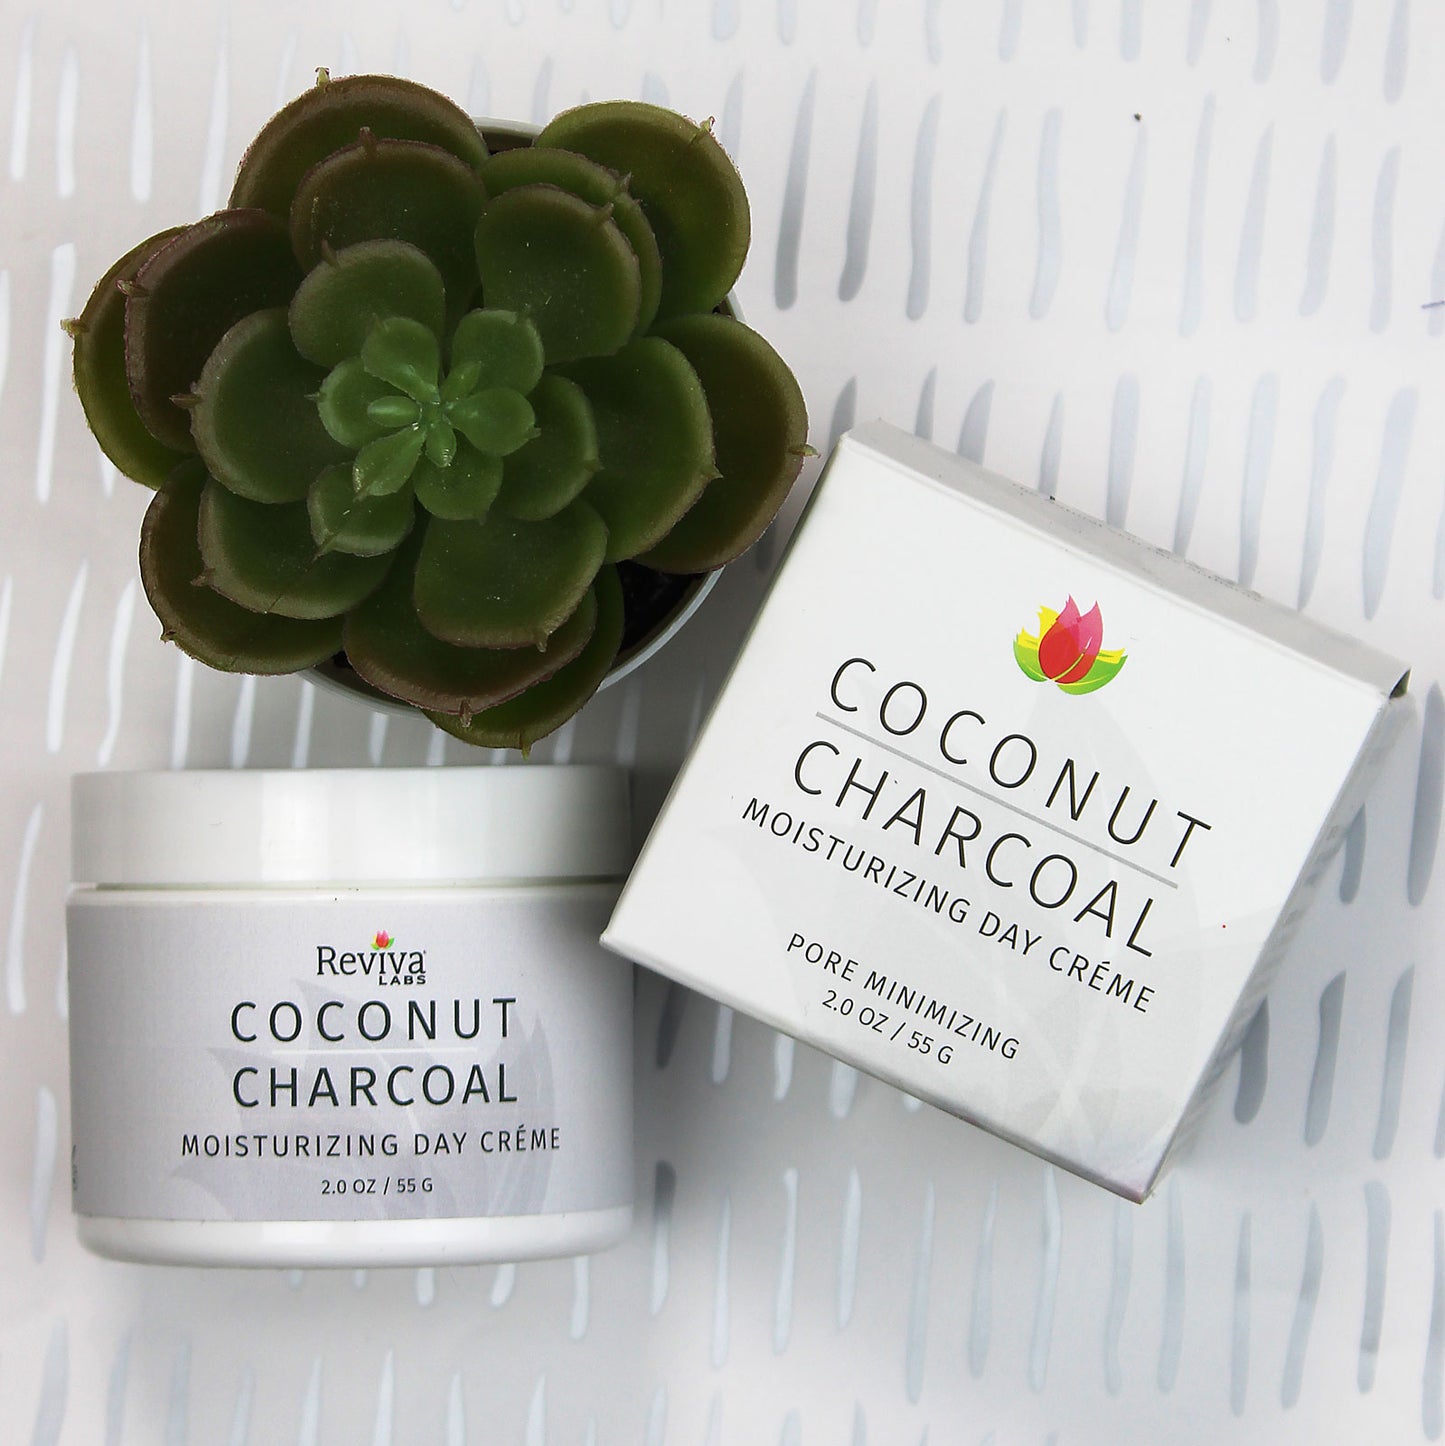 Coconut Charcoal Moisturizing Day Crème